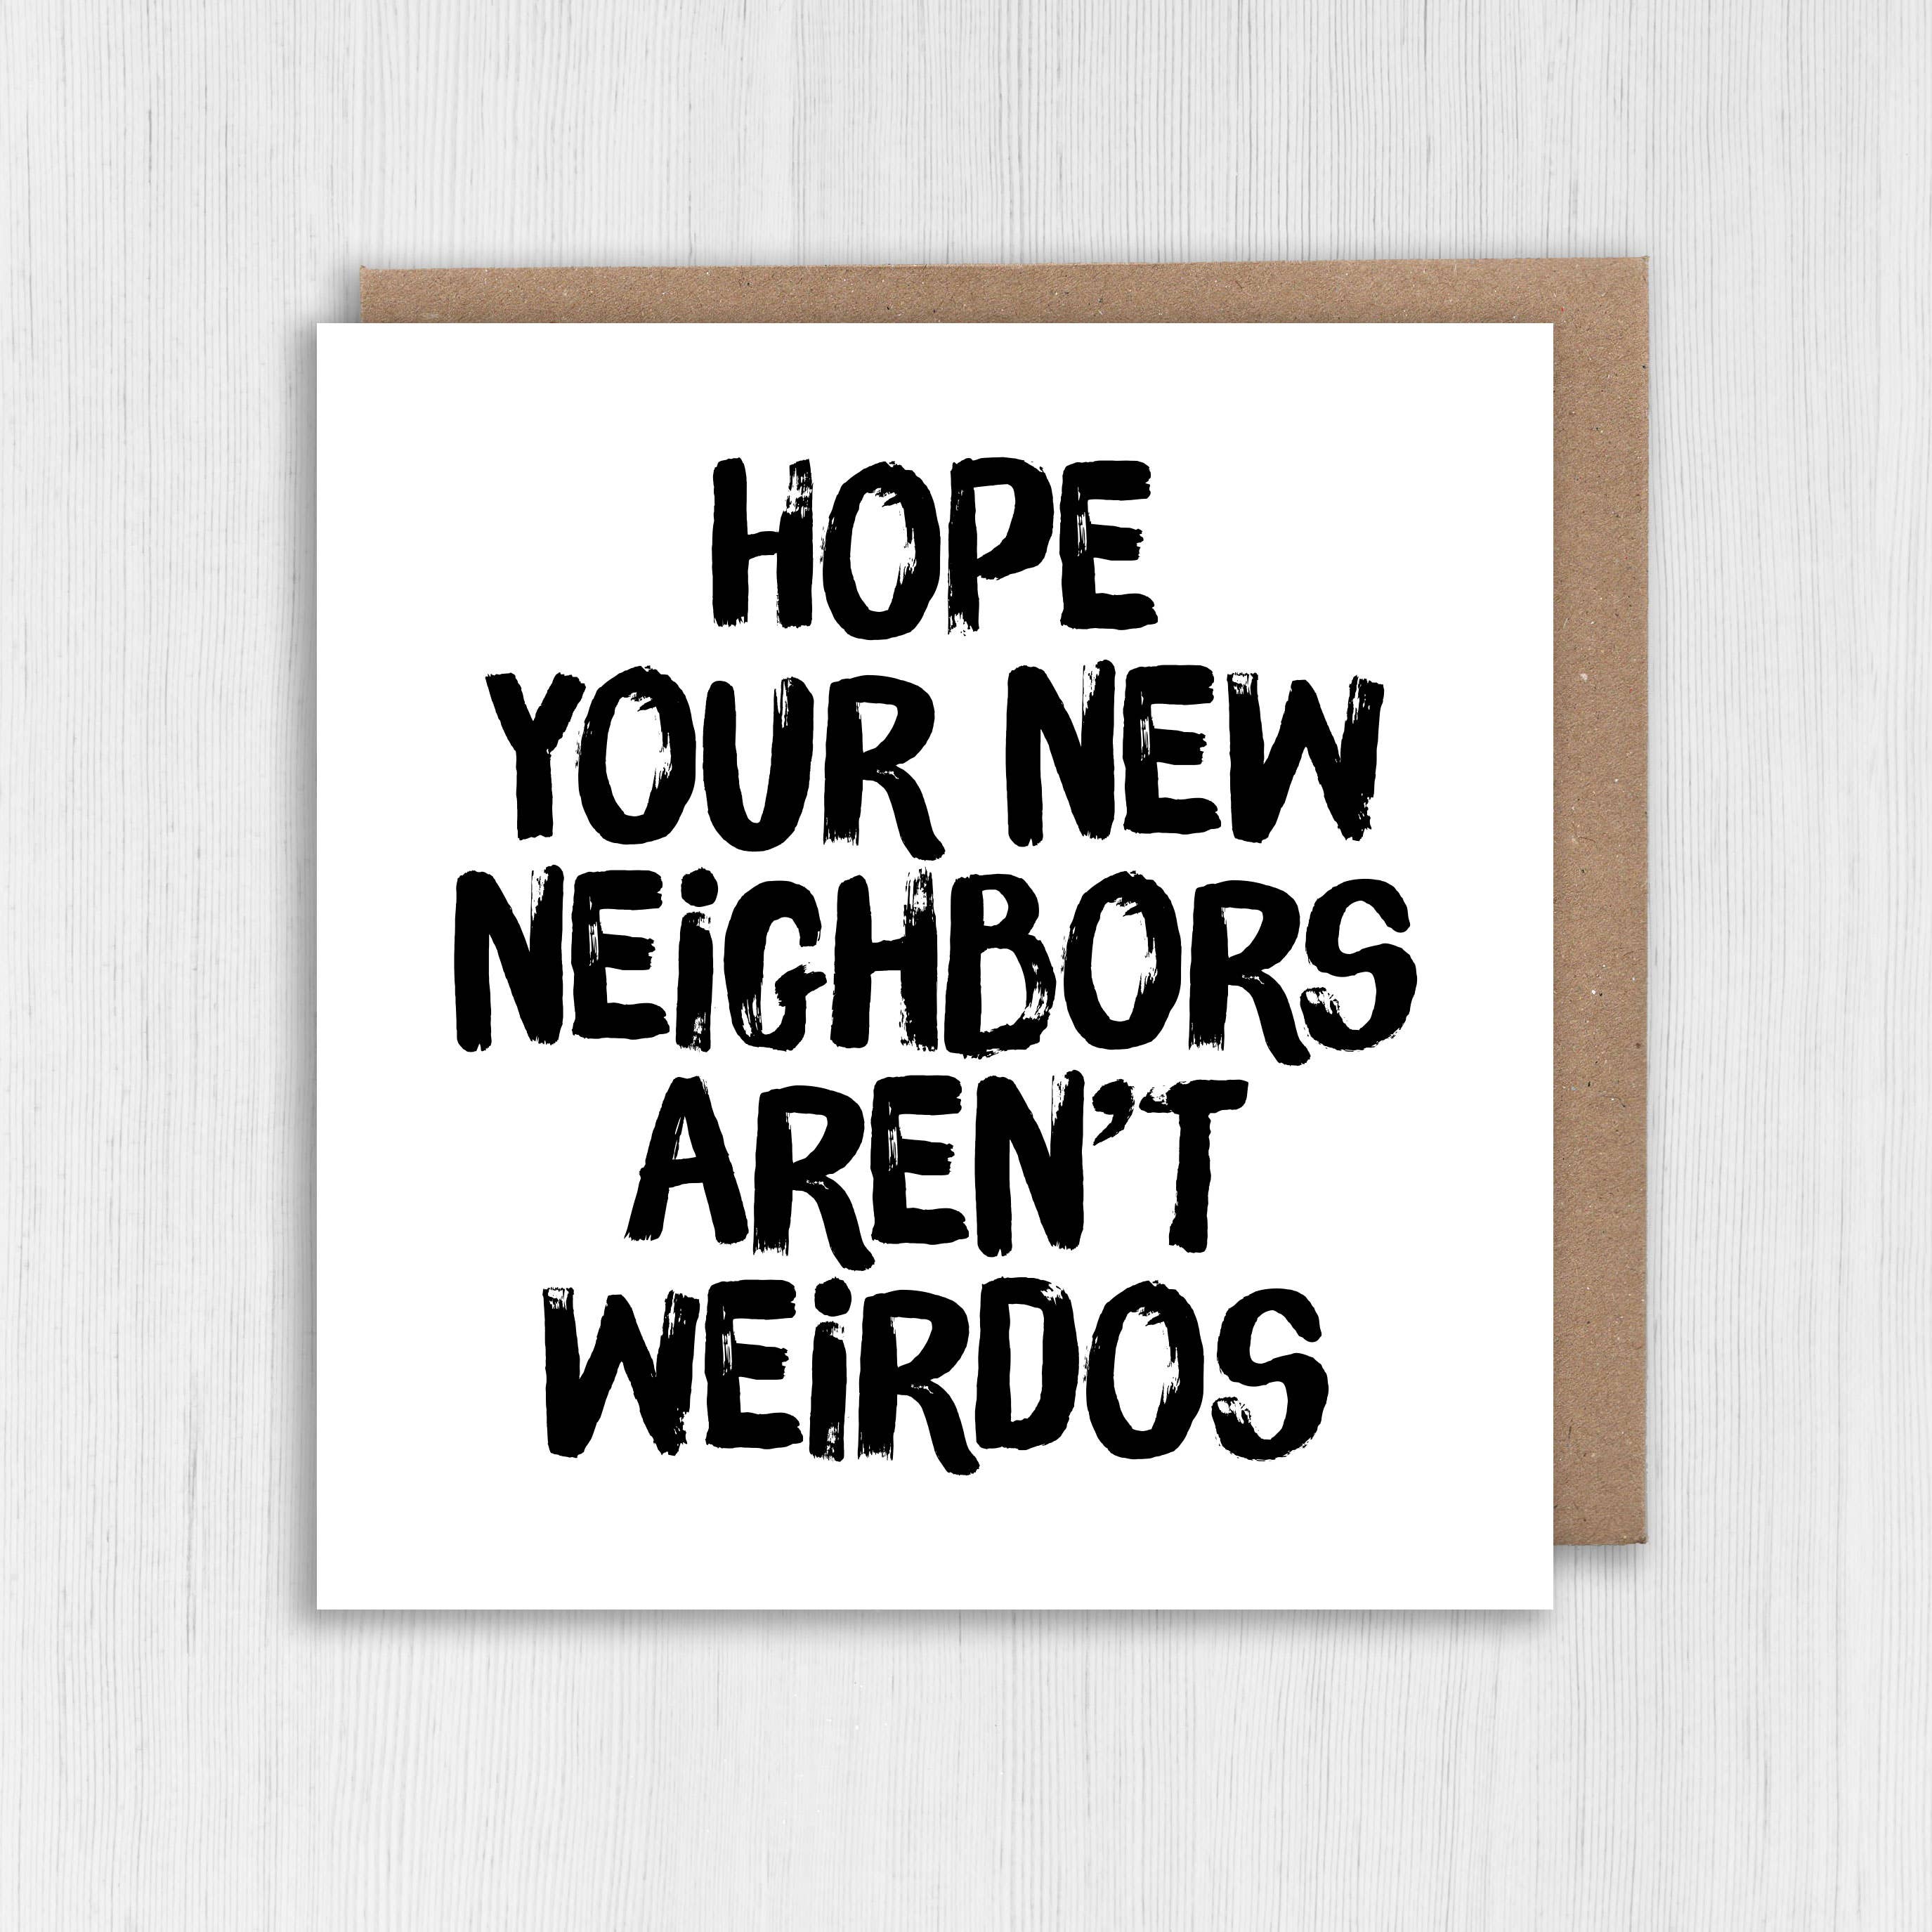 New home card: Hope your new neighbours aren't weirdos